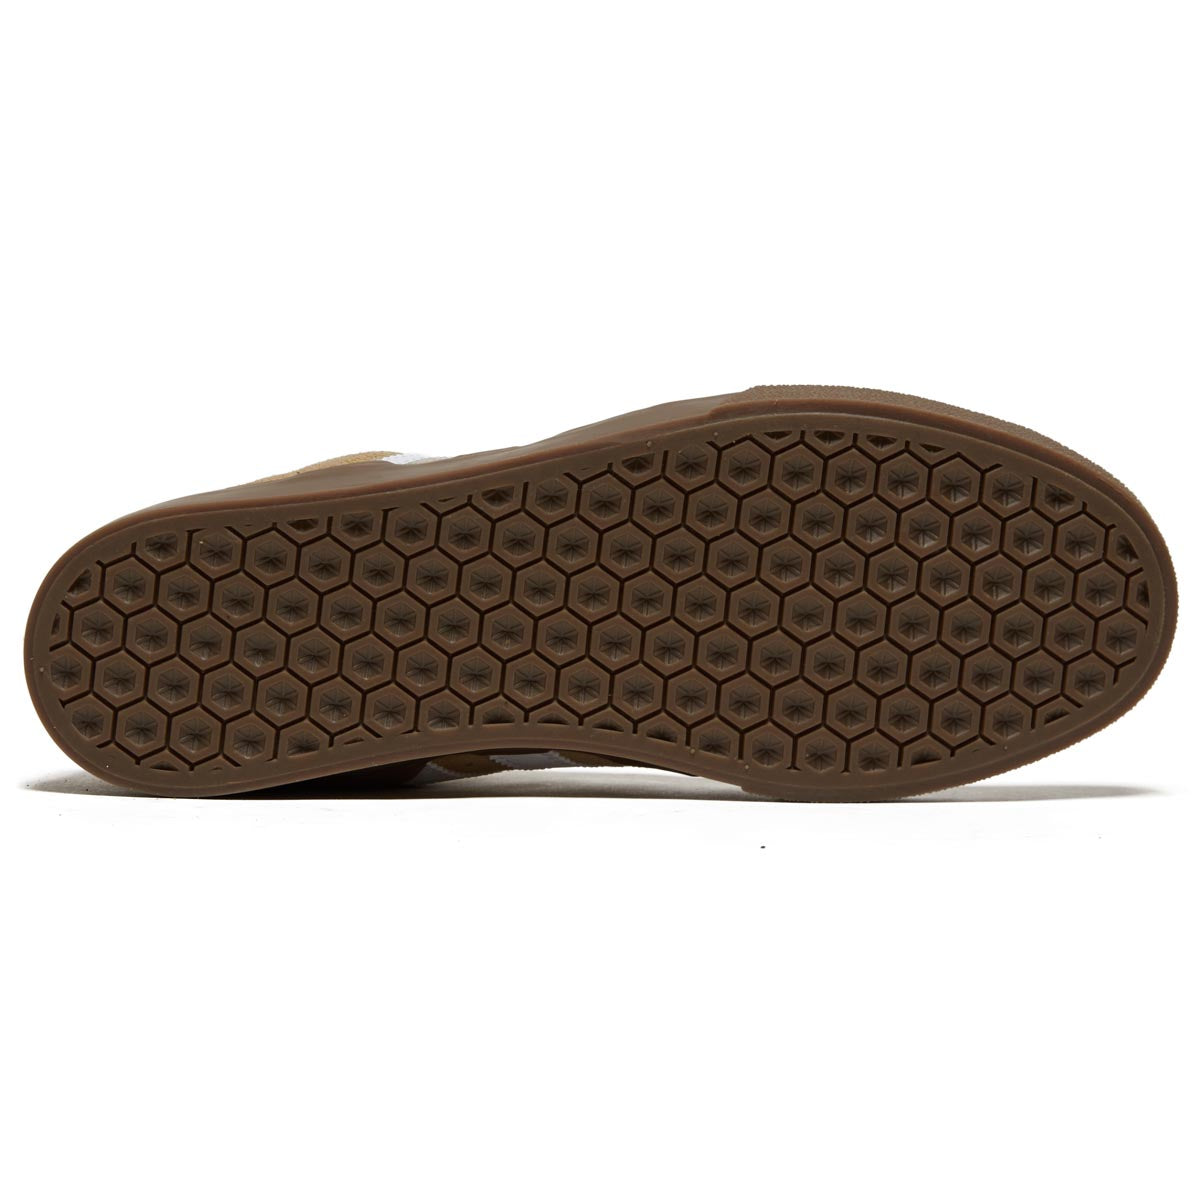 Adidas Busenitz Vulc II Shoes - Cardboard/Chalk White/Gold Metallic image 4